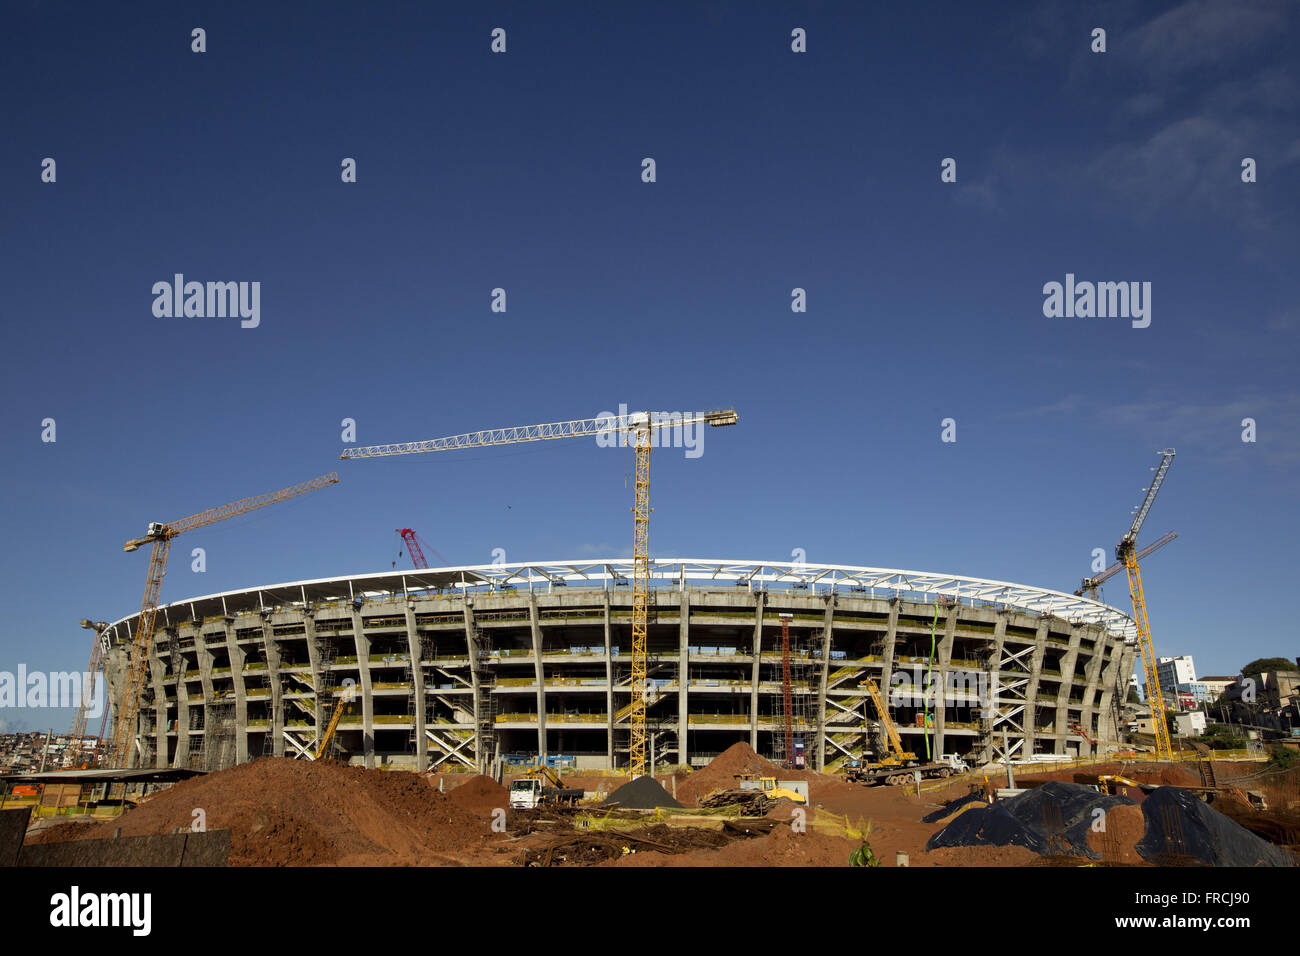 Arena Fonte Nova - Estadio old Octavio Mangabeira - reform for the World Cup 2014 Stock Photo